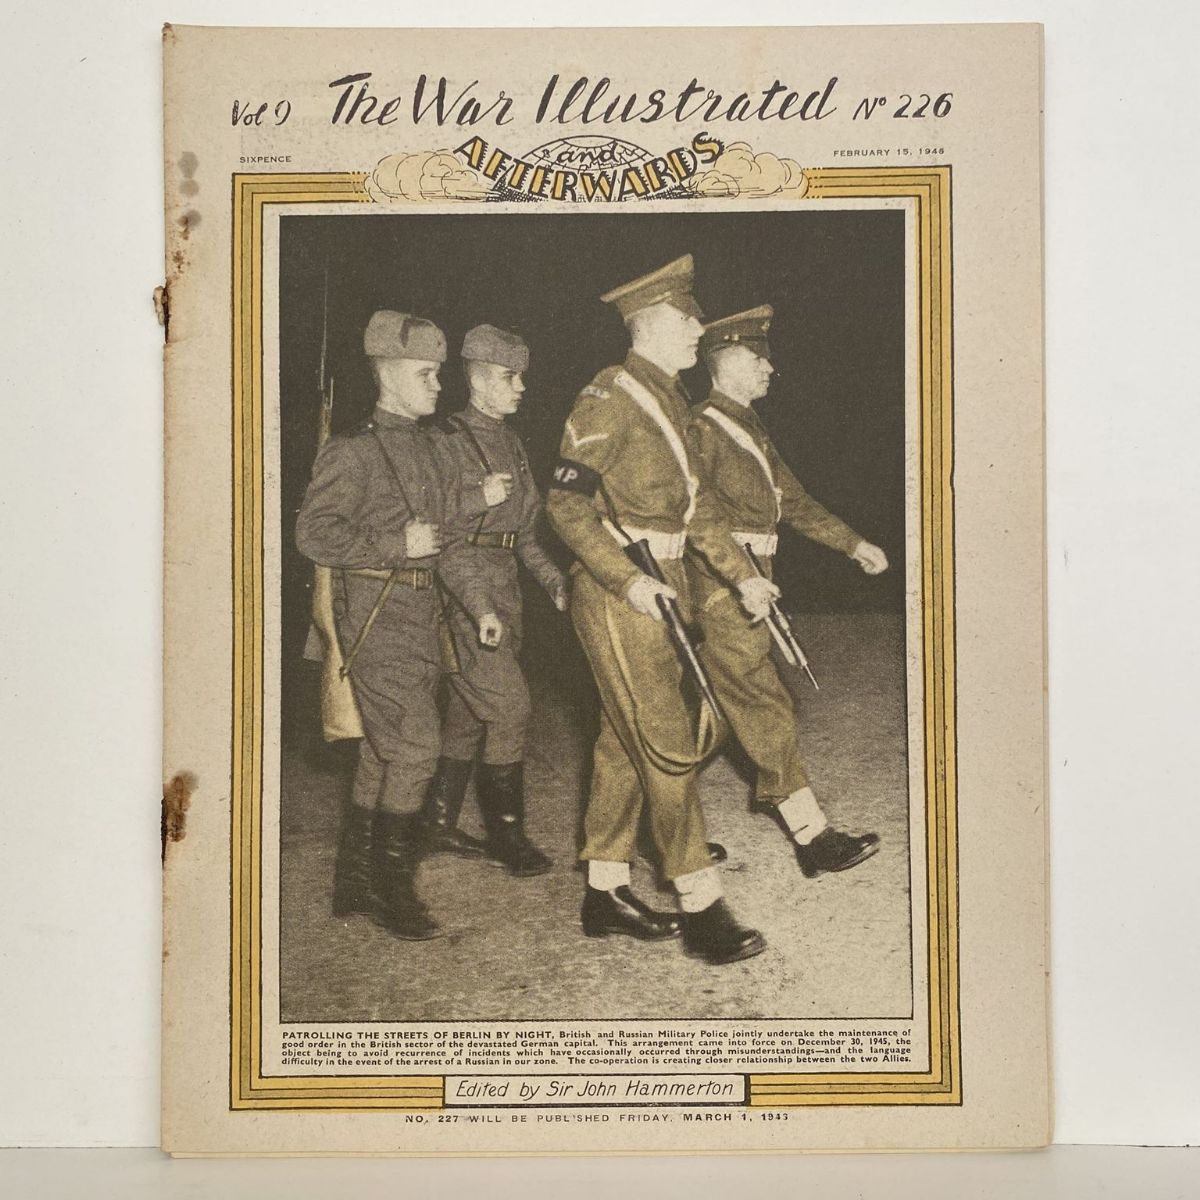 THE WAR ILLUSTRATED - Vol 9, No 226, 15th Feb 1946